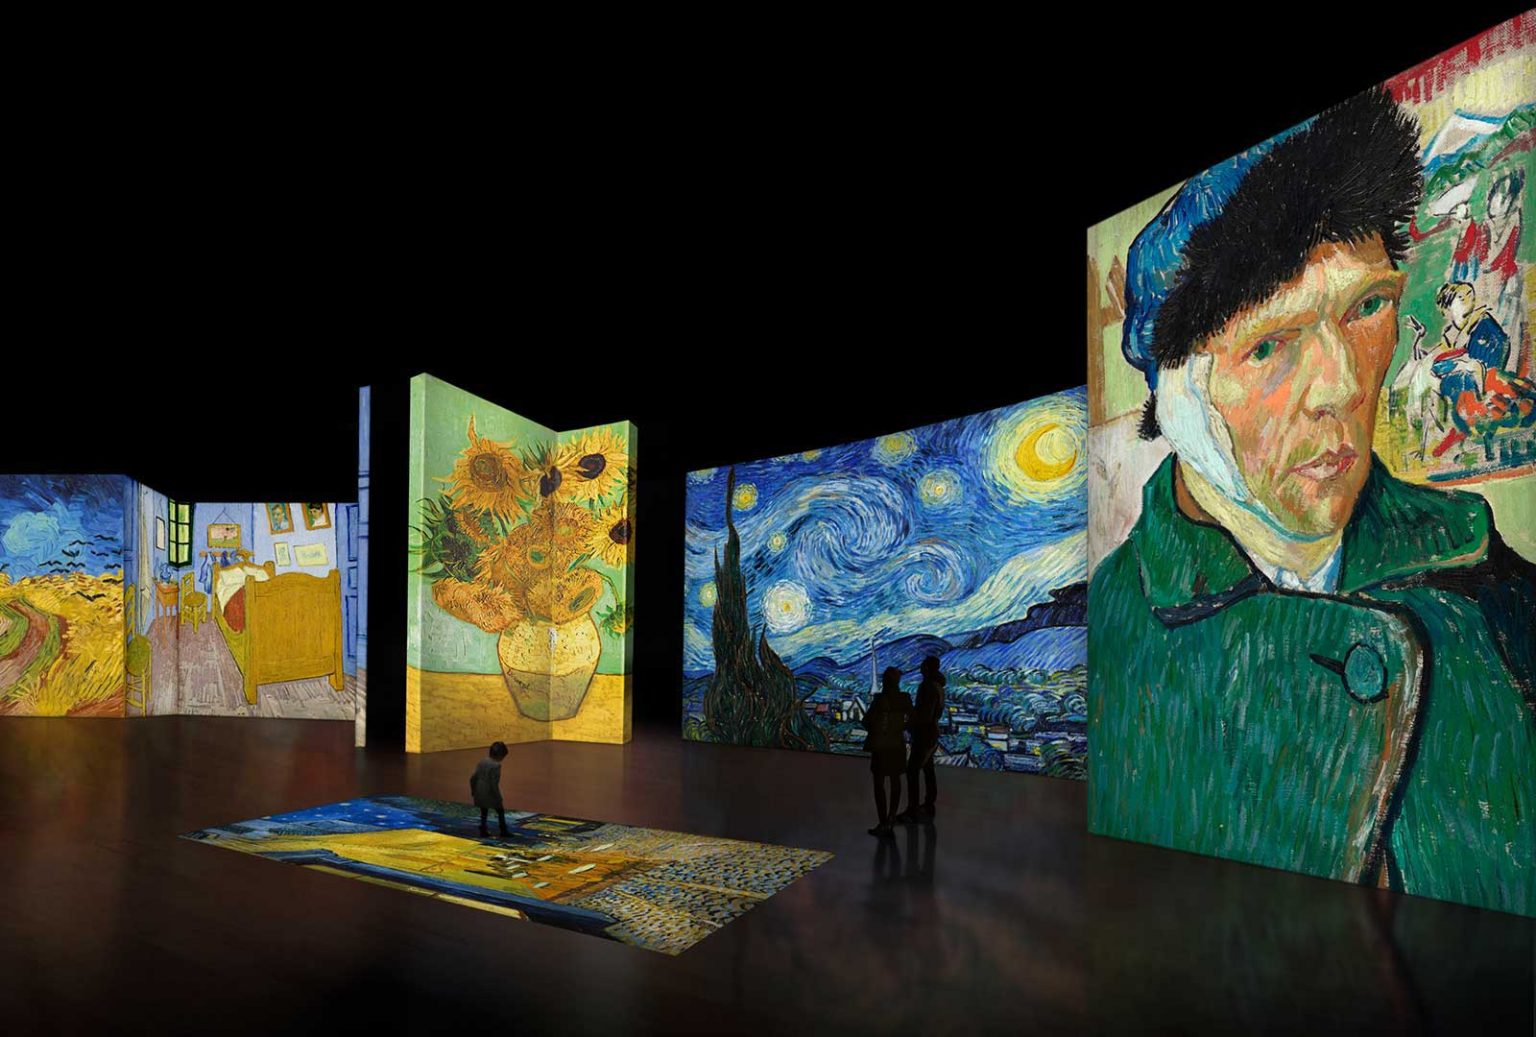 Van Gogh Alive UK the most visited immersive, multisensory